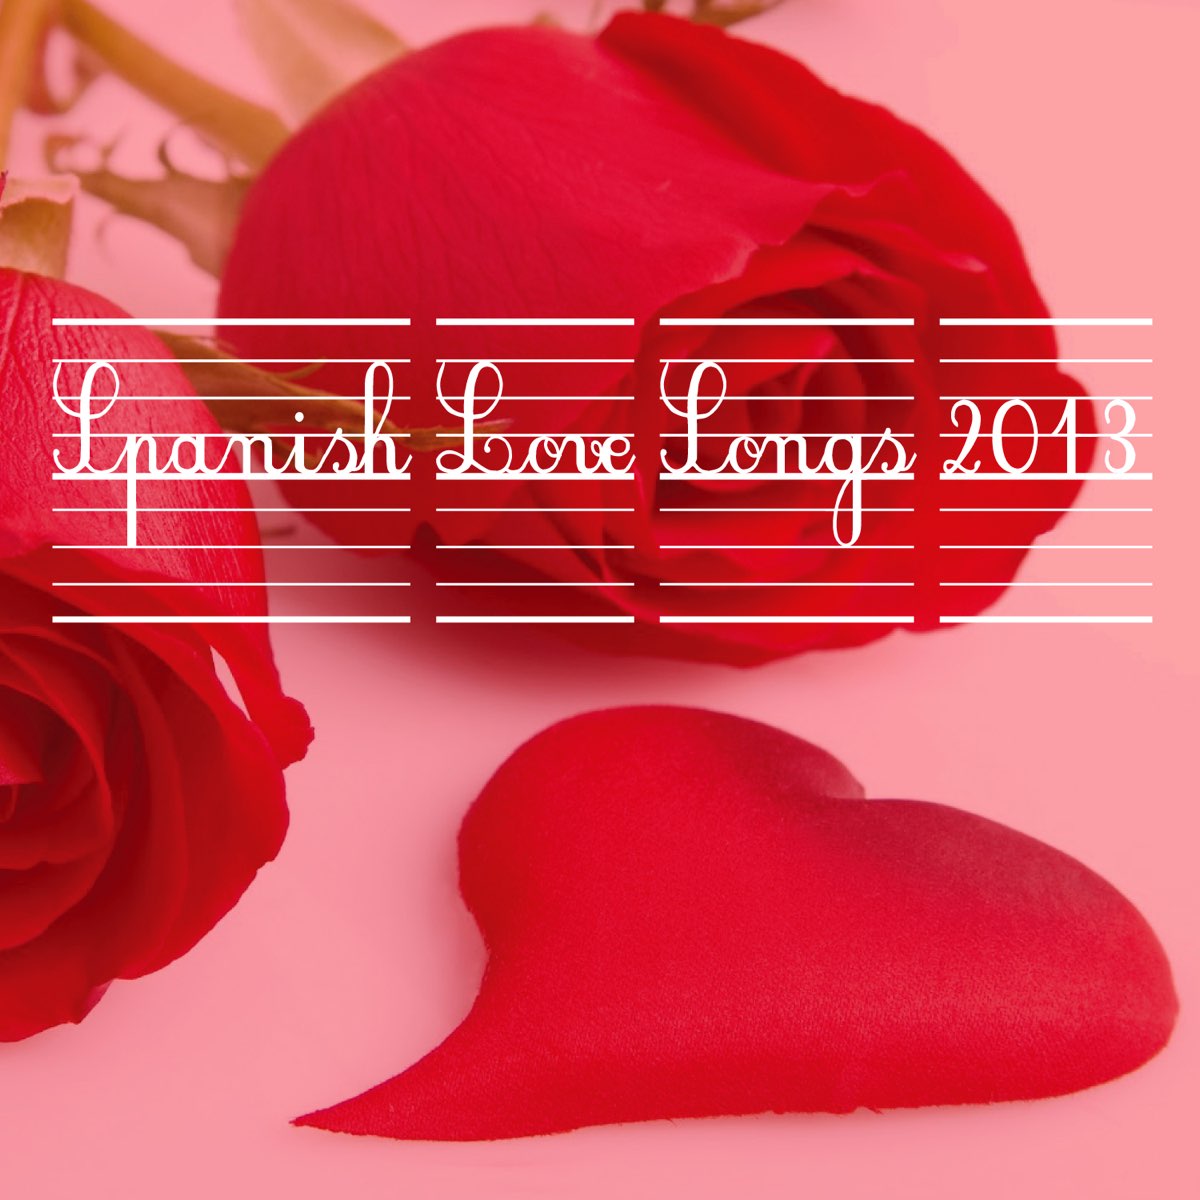 Spanish Love Songs 2013 - Album by Various Artists - Apple Music